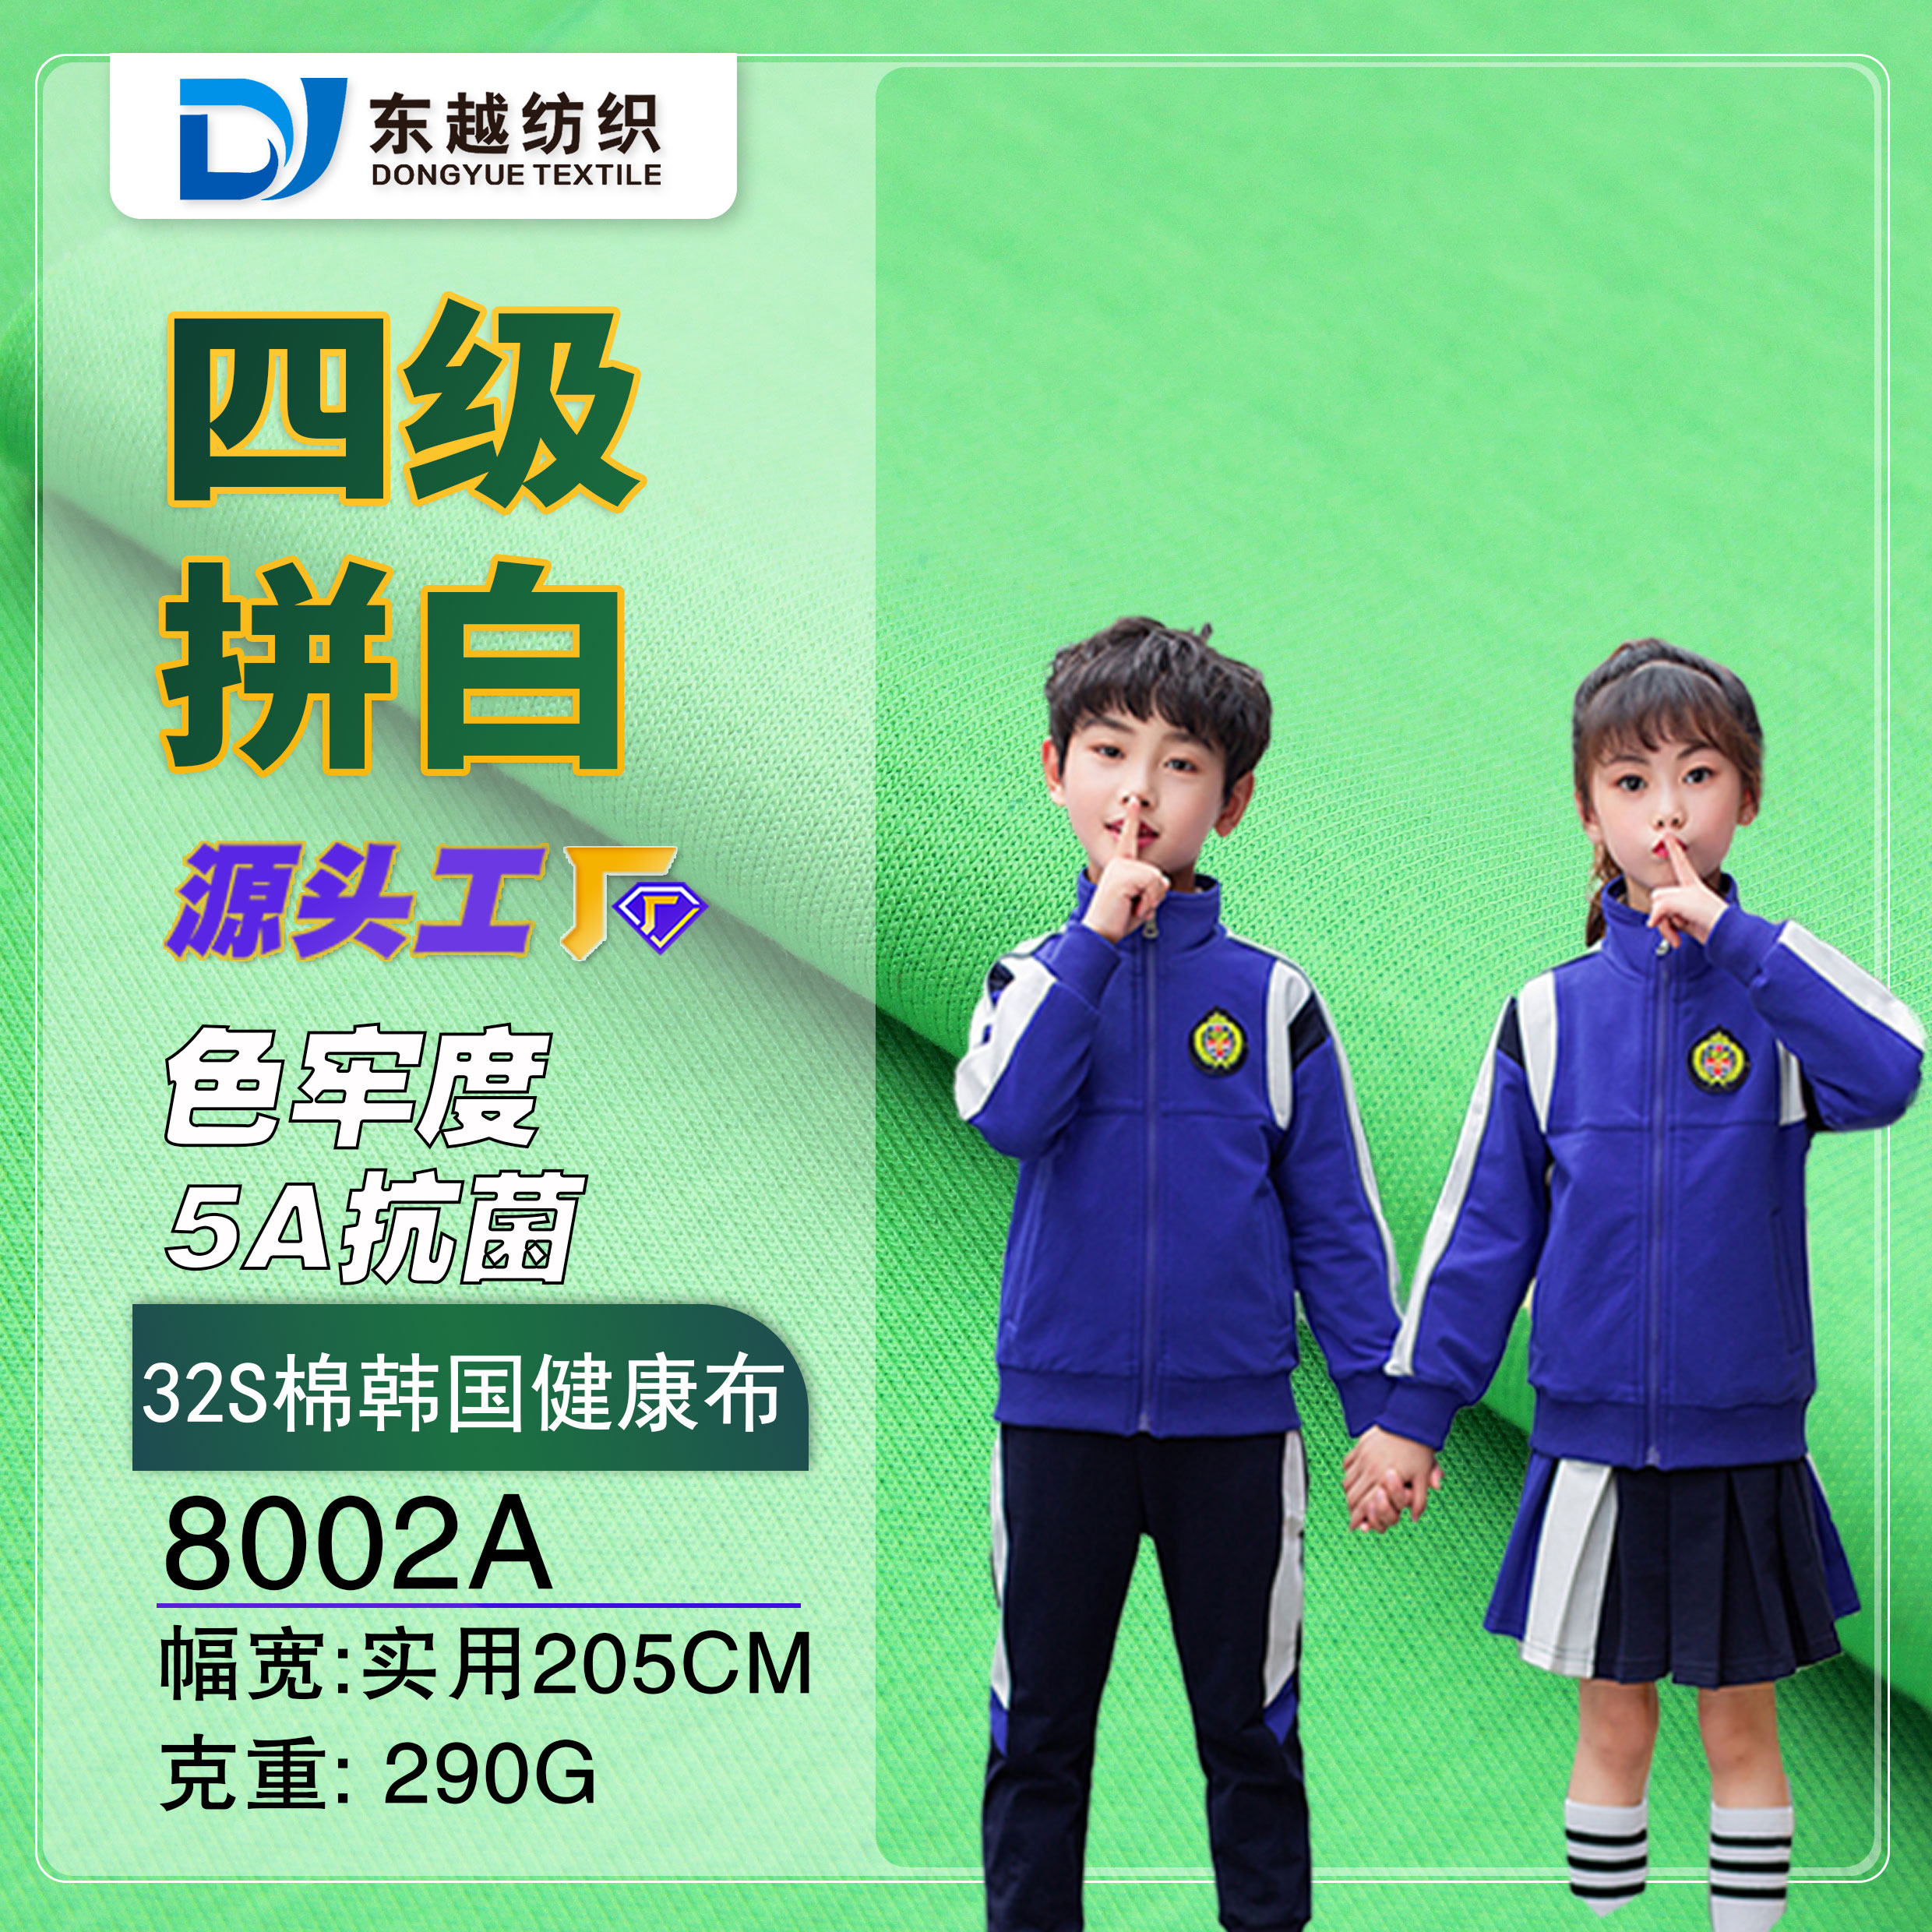 8002A 韓國健康布32S棉蓋滌雙面布秋季外套運動服校服面料